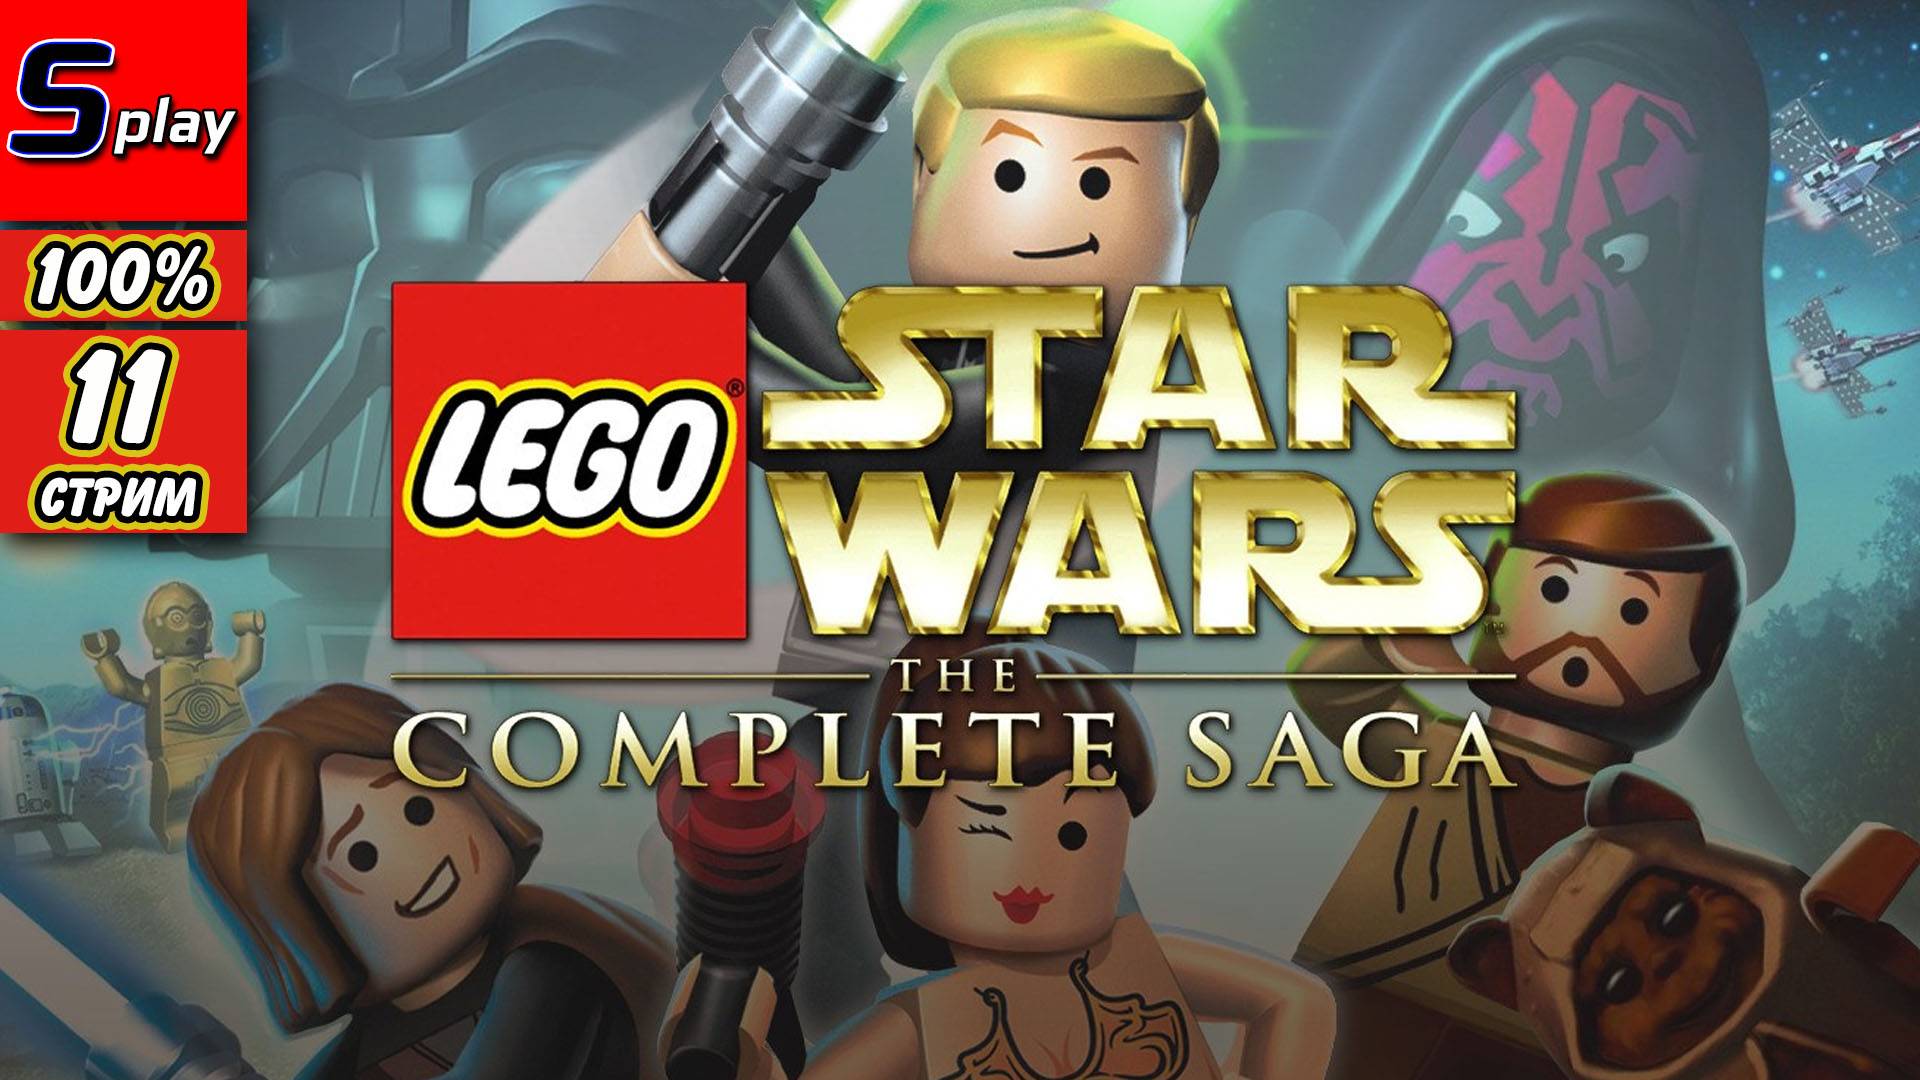 Lego Star Wars The Complete Saga на 100% - [11-стрим] - Собирательство